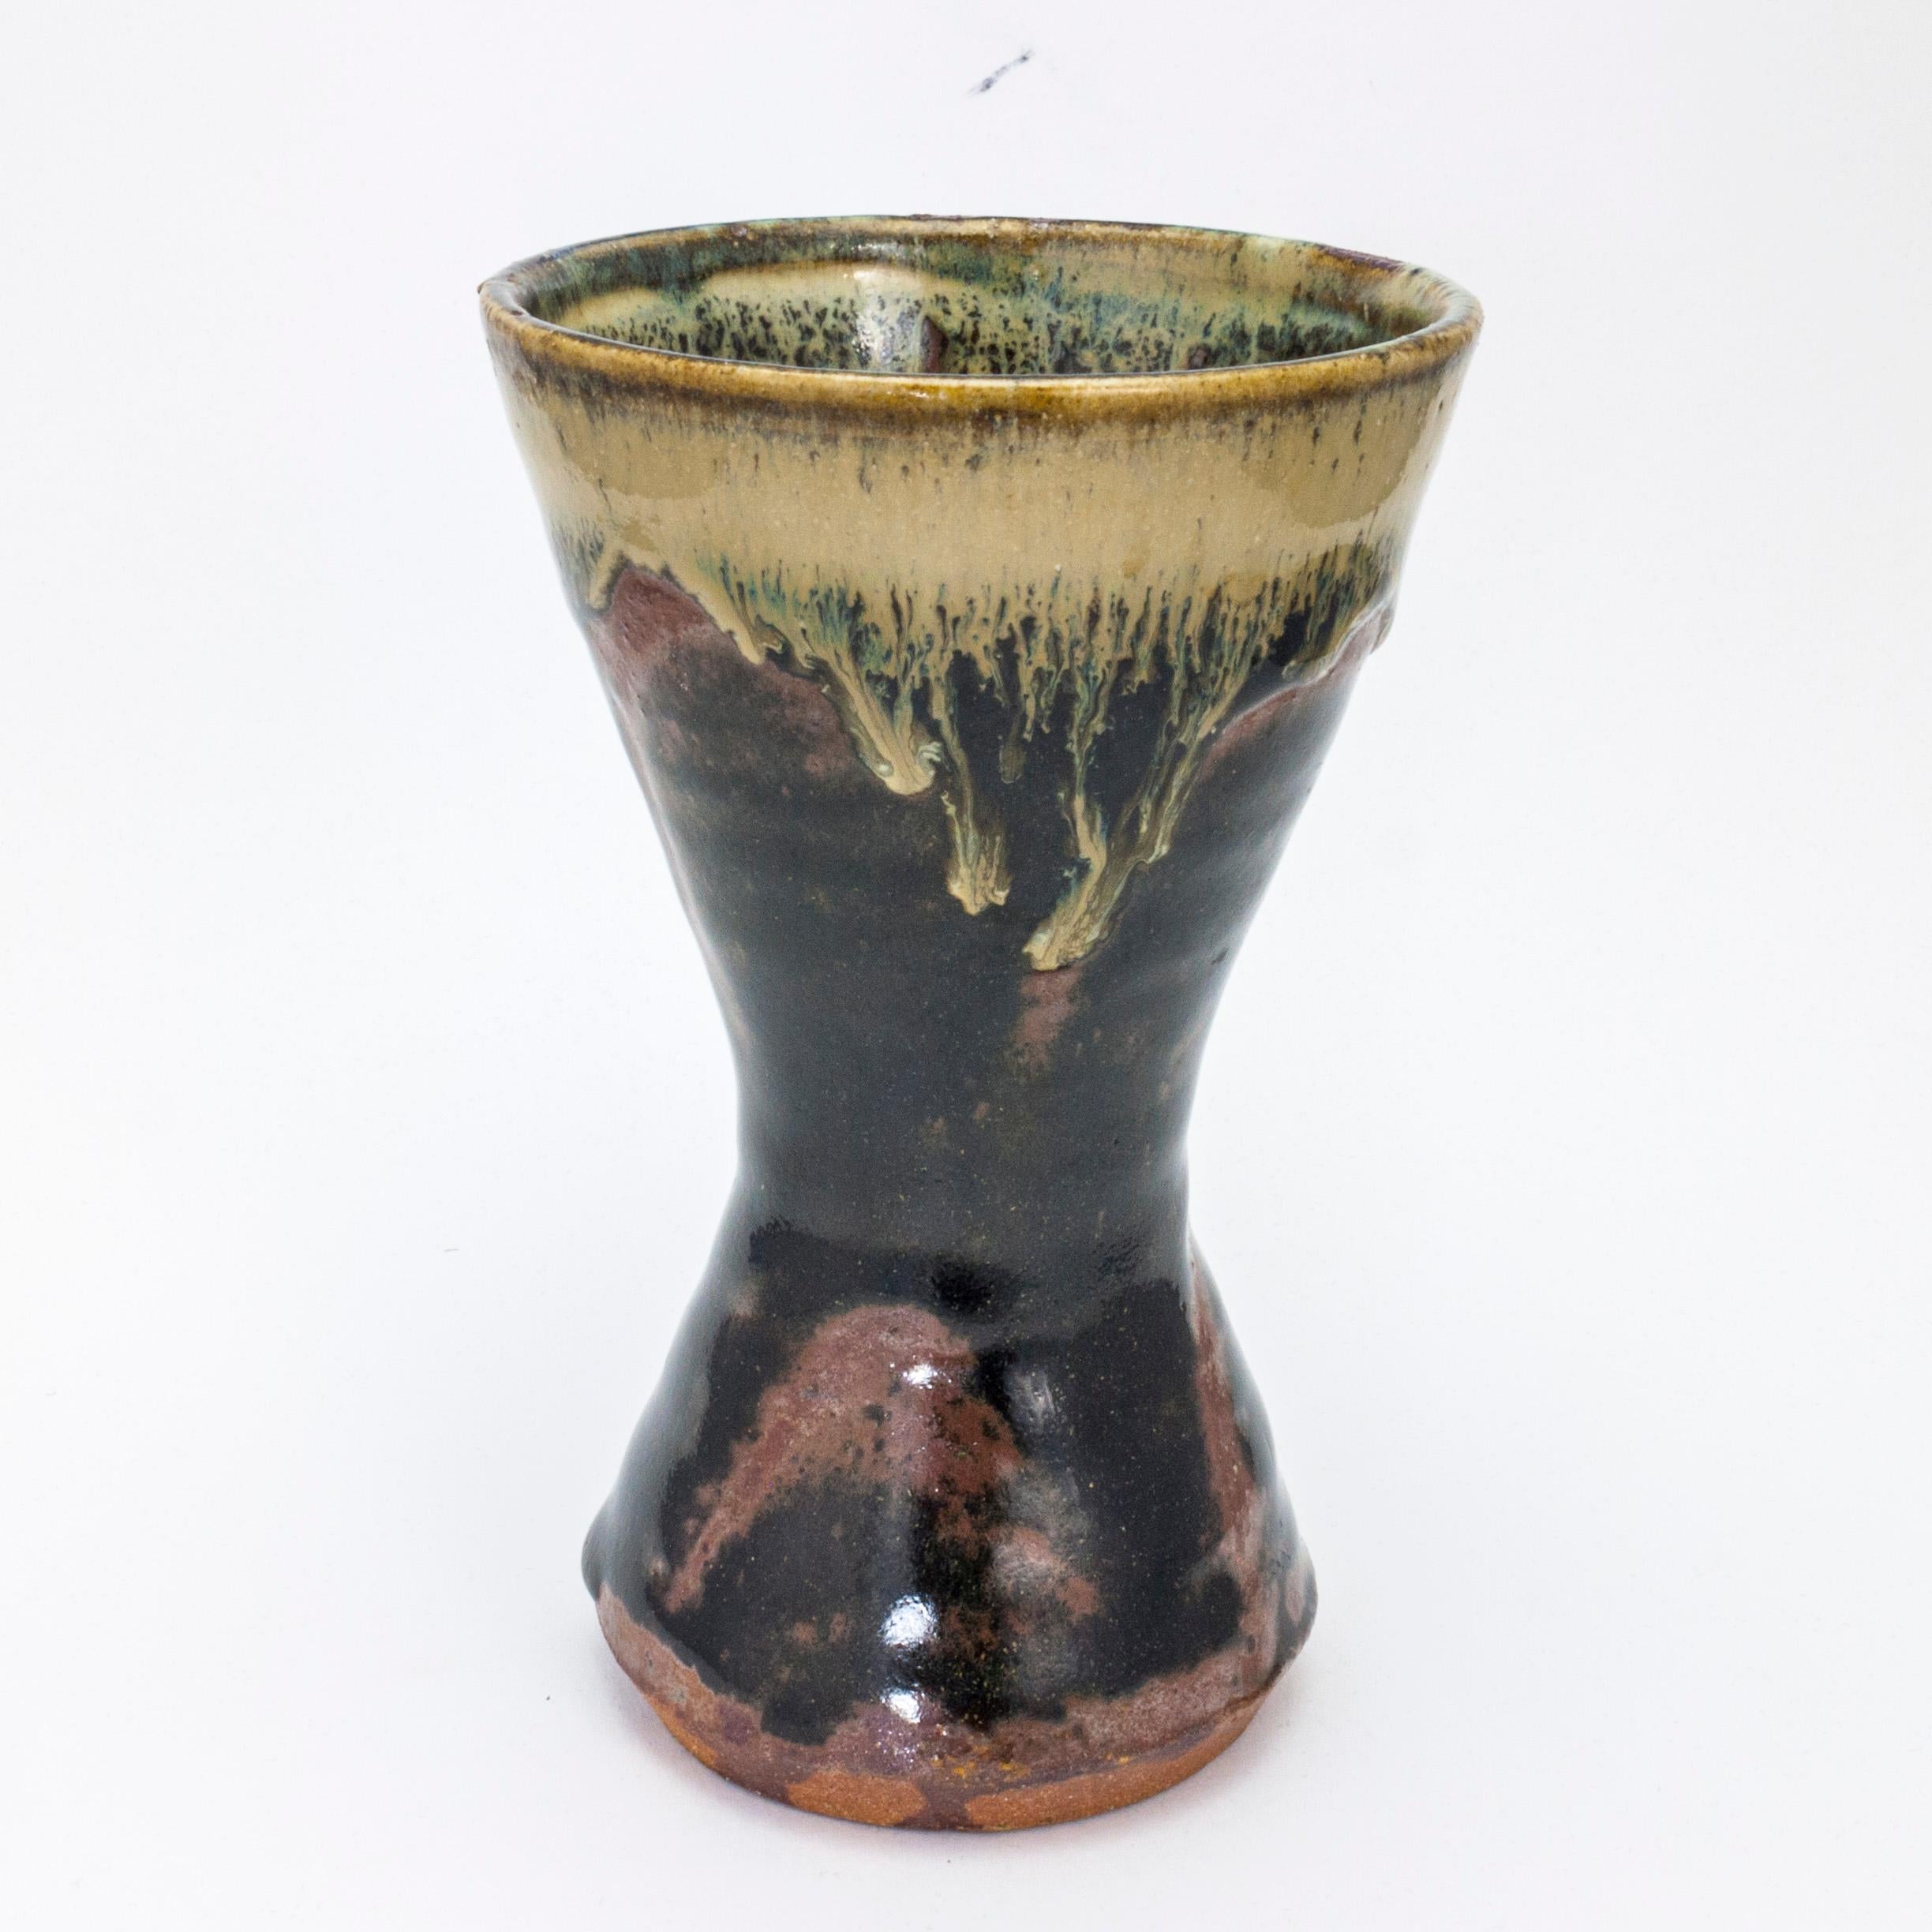 Artist: Shoji Hamada 
Title: Vase
Medium: Stoneware, Kaki Glaze over Transparent Glaze 
Size: 6.5 x 4 x 4inches
Edition: Unique
Provenance: Kansas City Private Collection

Shōji Hamada was a Japanese potter. He was a significant influence on studio